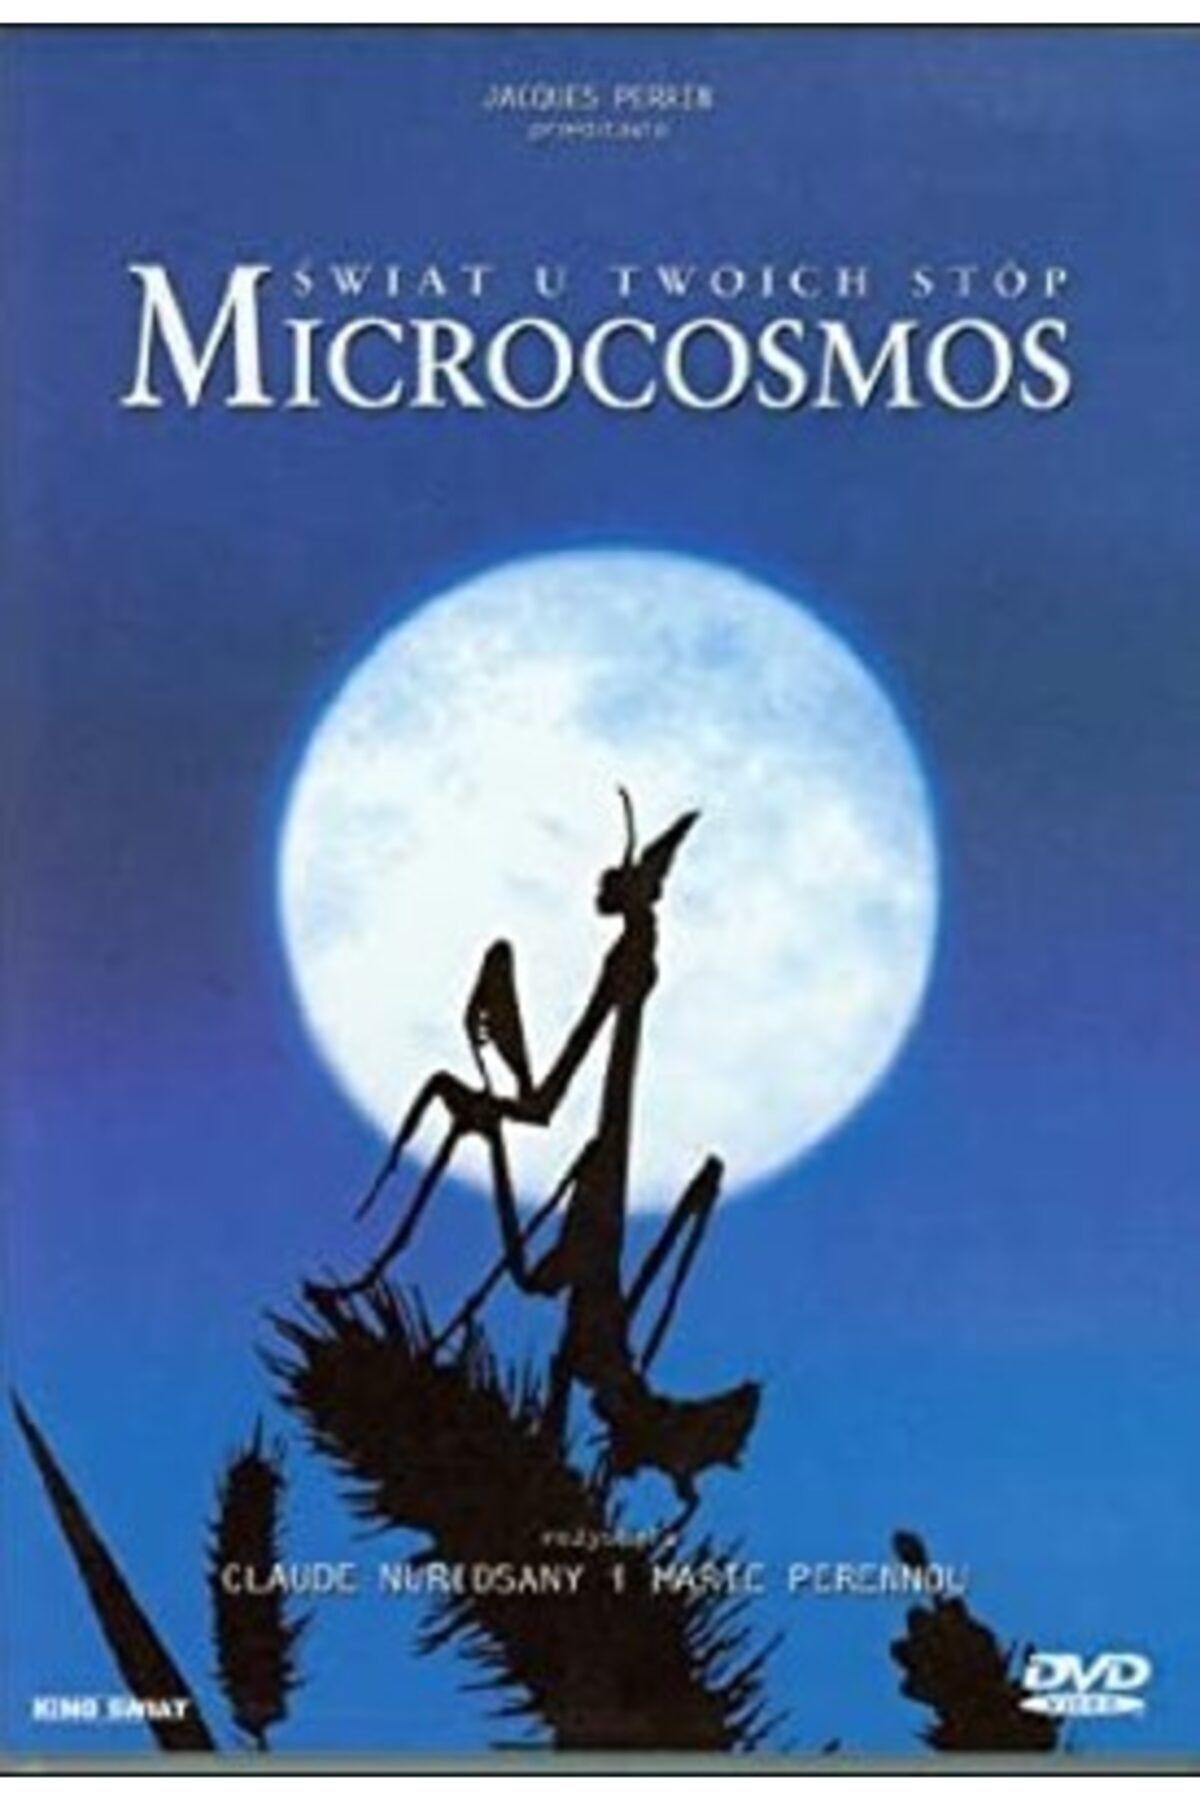 Sony Microcosmos